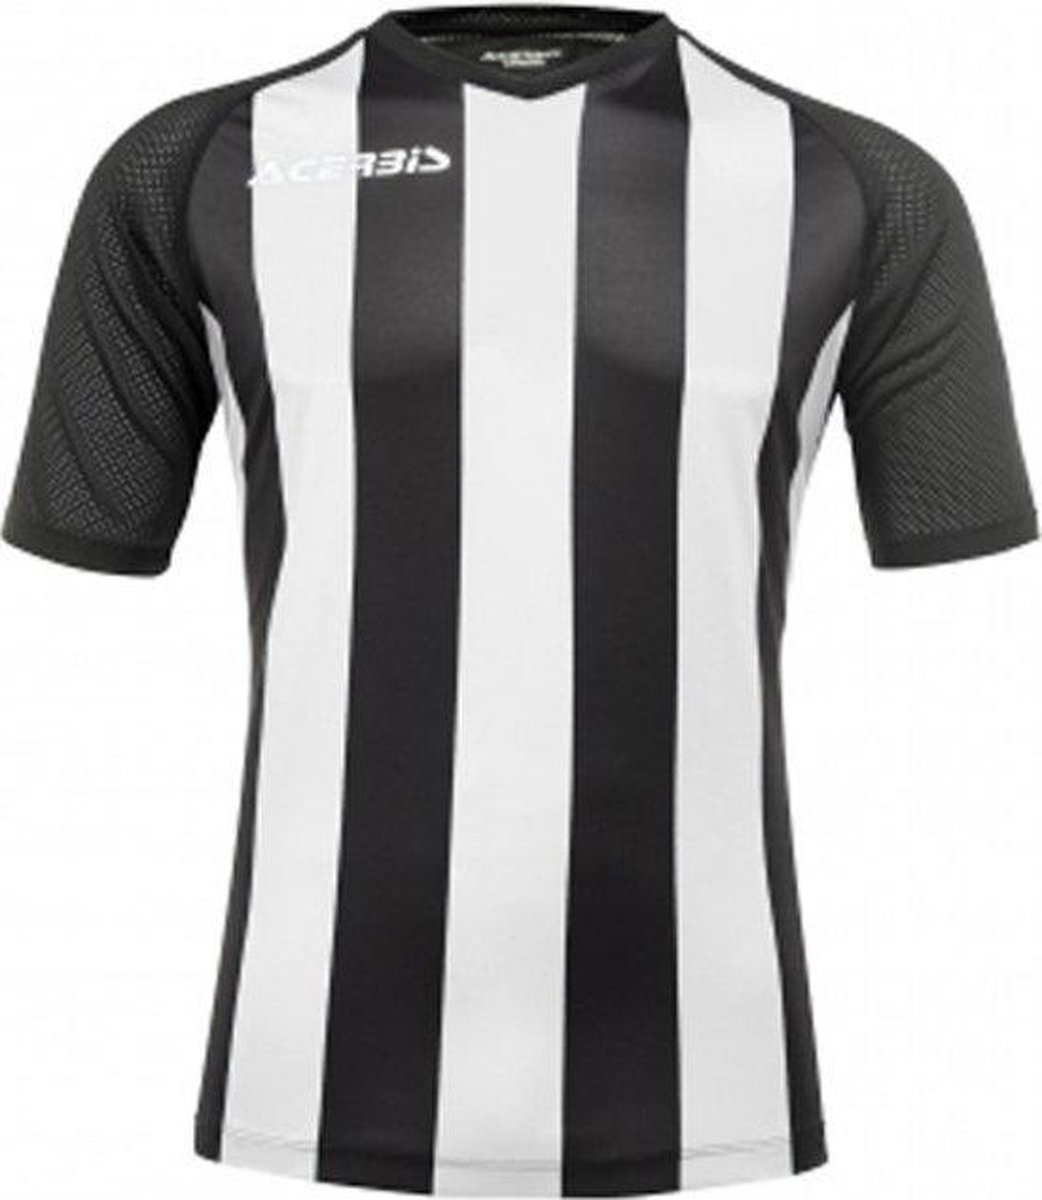 Acerbis Sports JOHAN STRIPED S/SL JERSEY (Sportshirt) BLACK/WHITE S